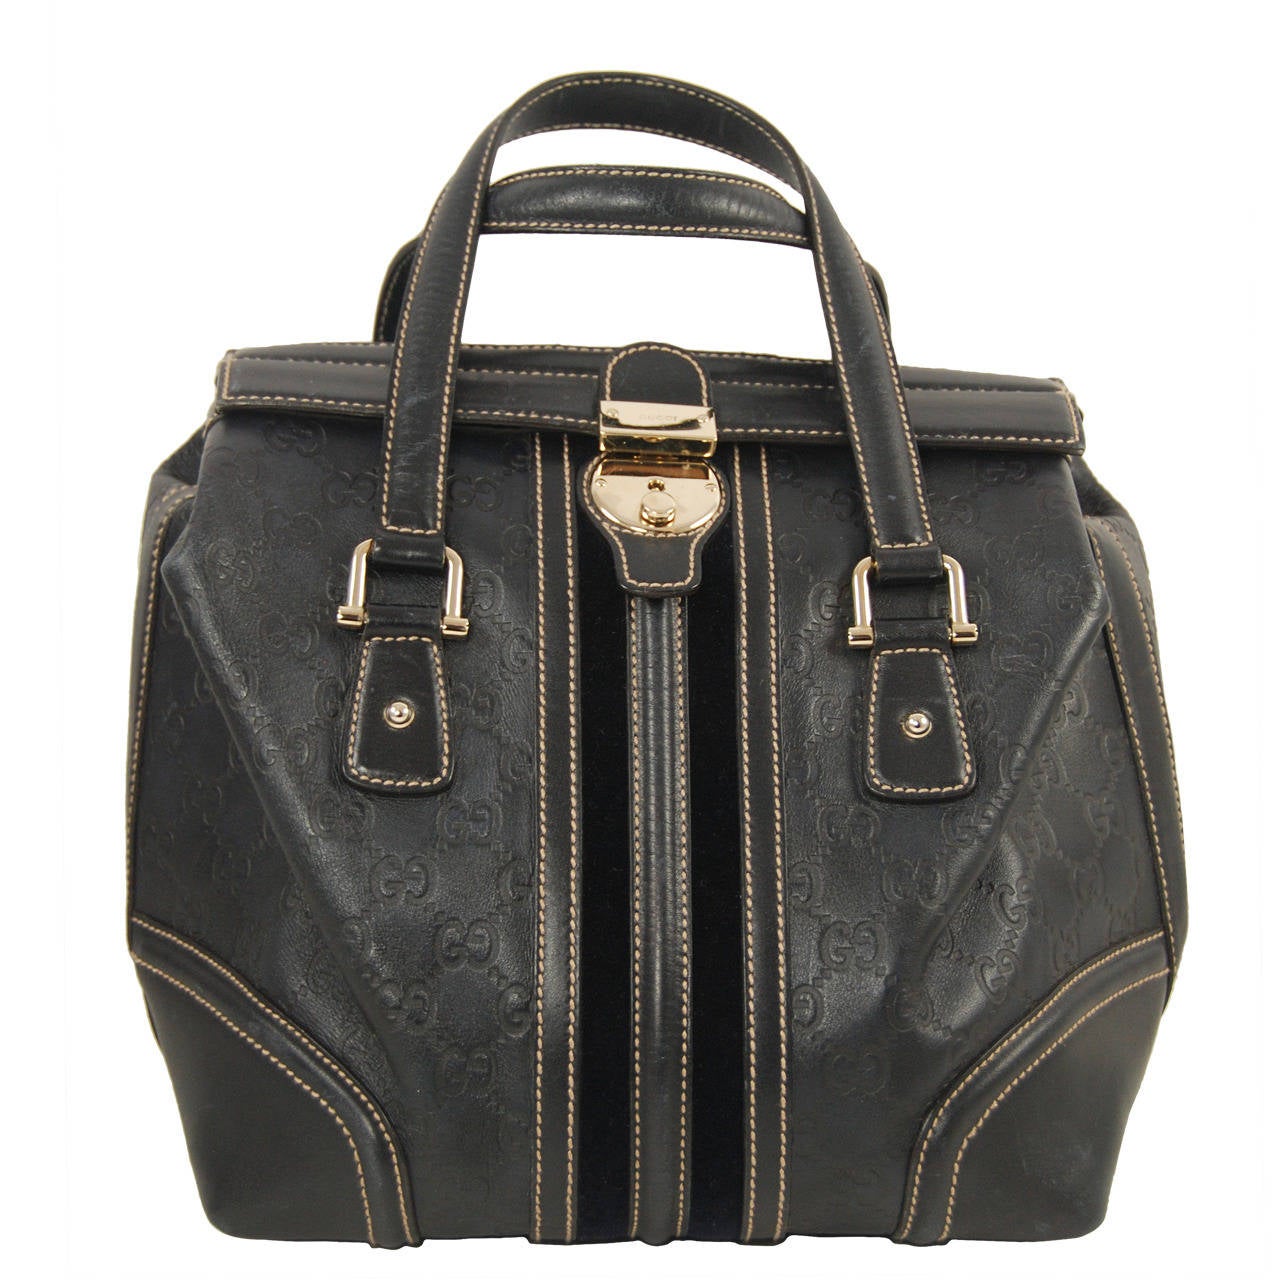 Gucci Embossed Navy Blue Leather Top Handle Handbag